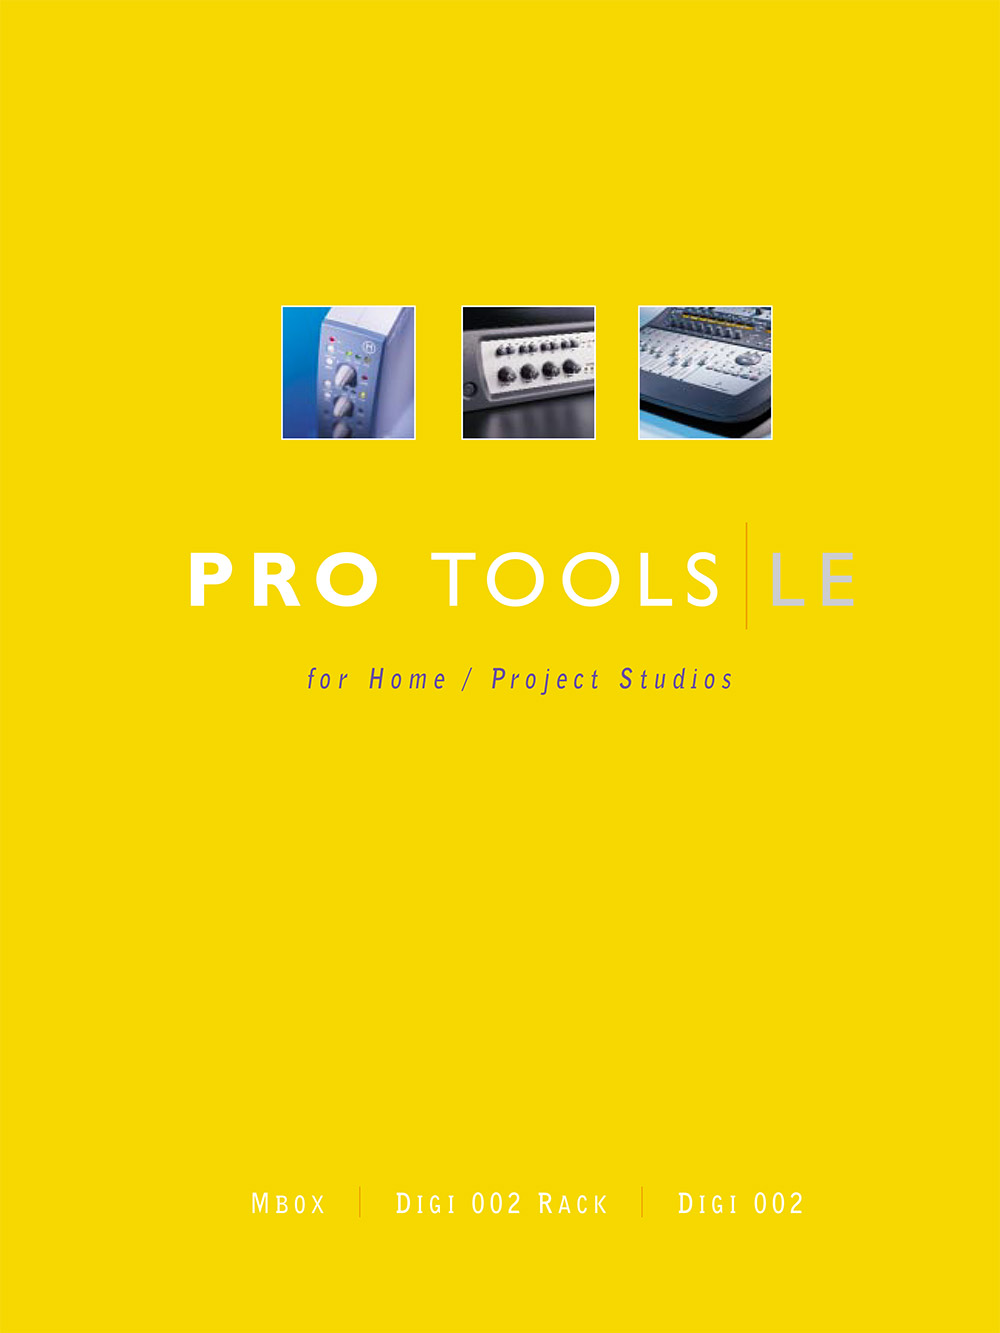 Boe Gatiss: Pro Tools LE brochure for Avid / Digidesign